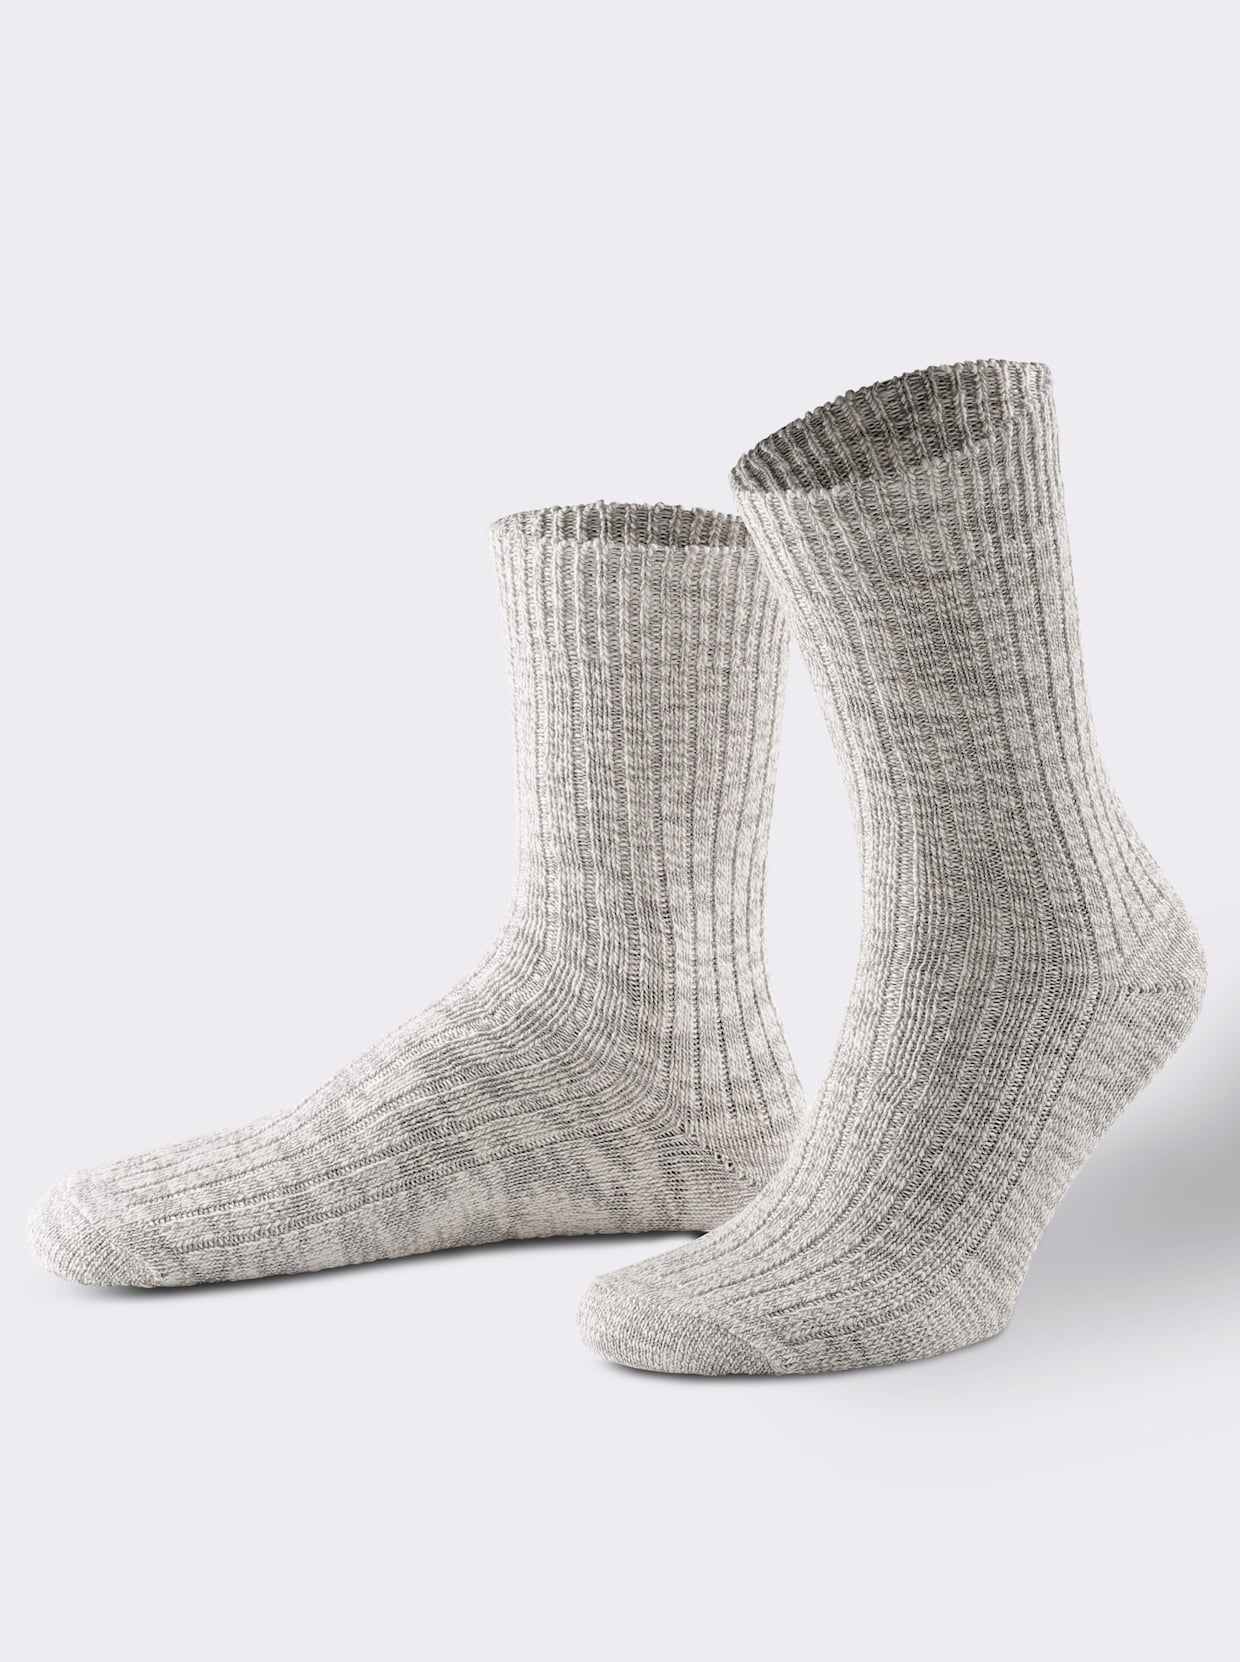 wäschepur Damen-Socken - grau-meliert